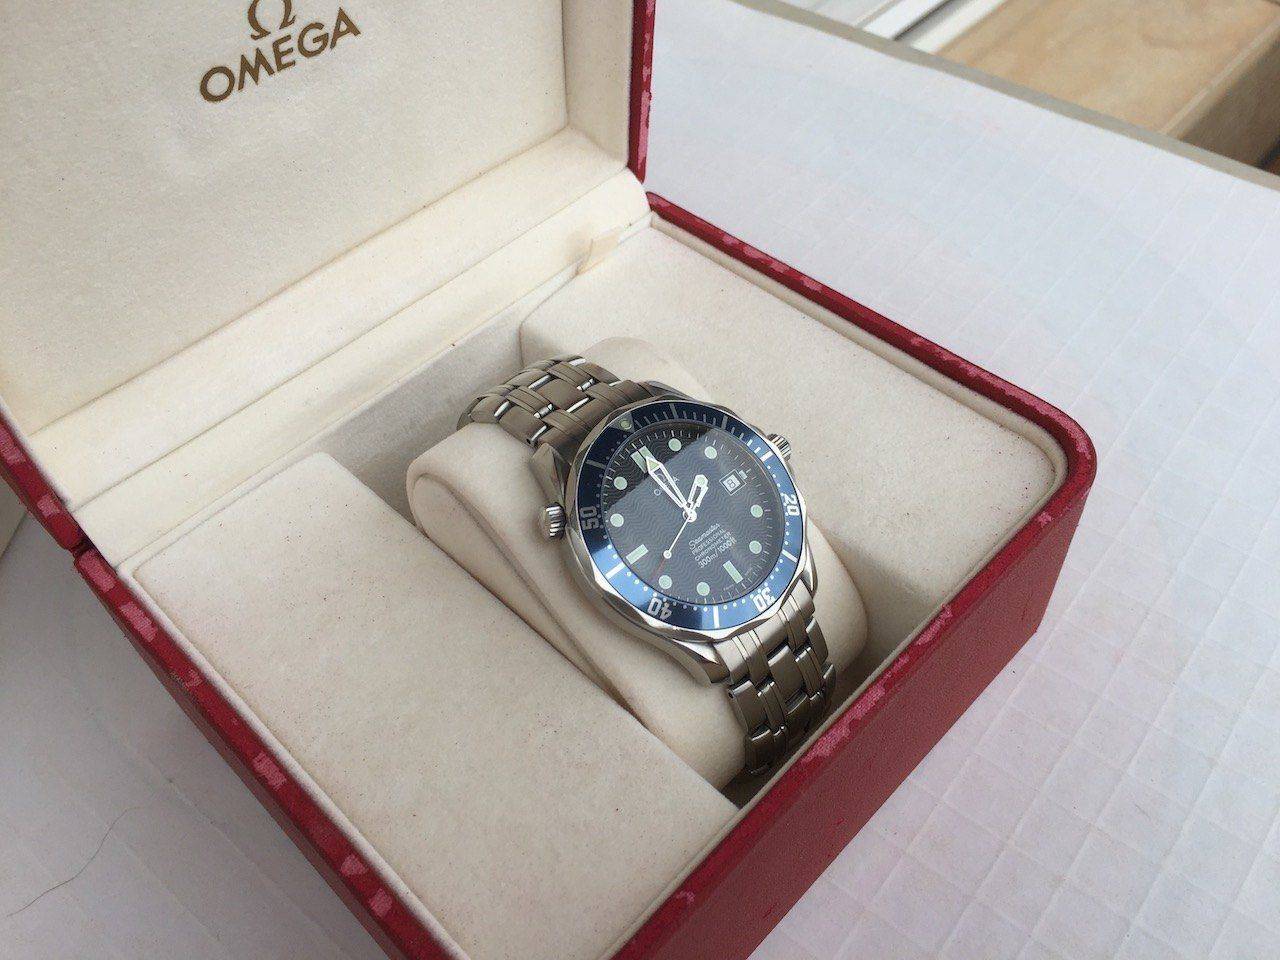 Omega-Seamaster-Professional-ref.-2531.80.00-68.jpg